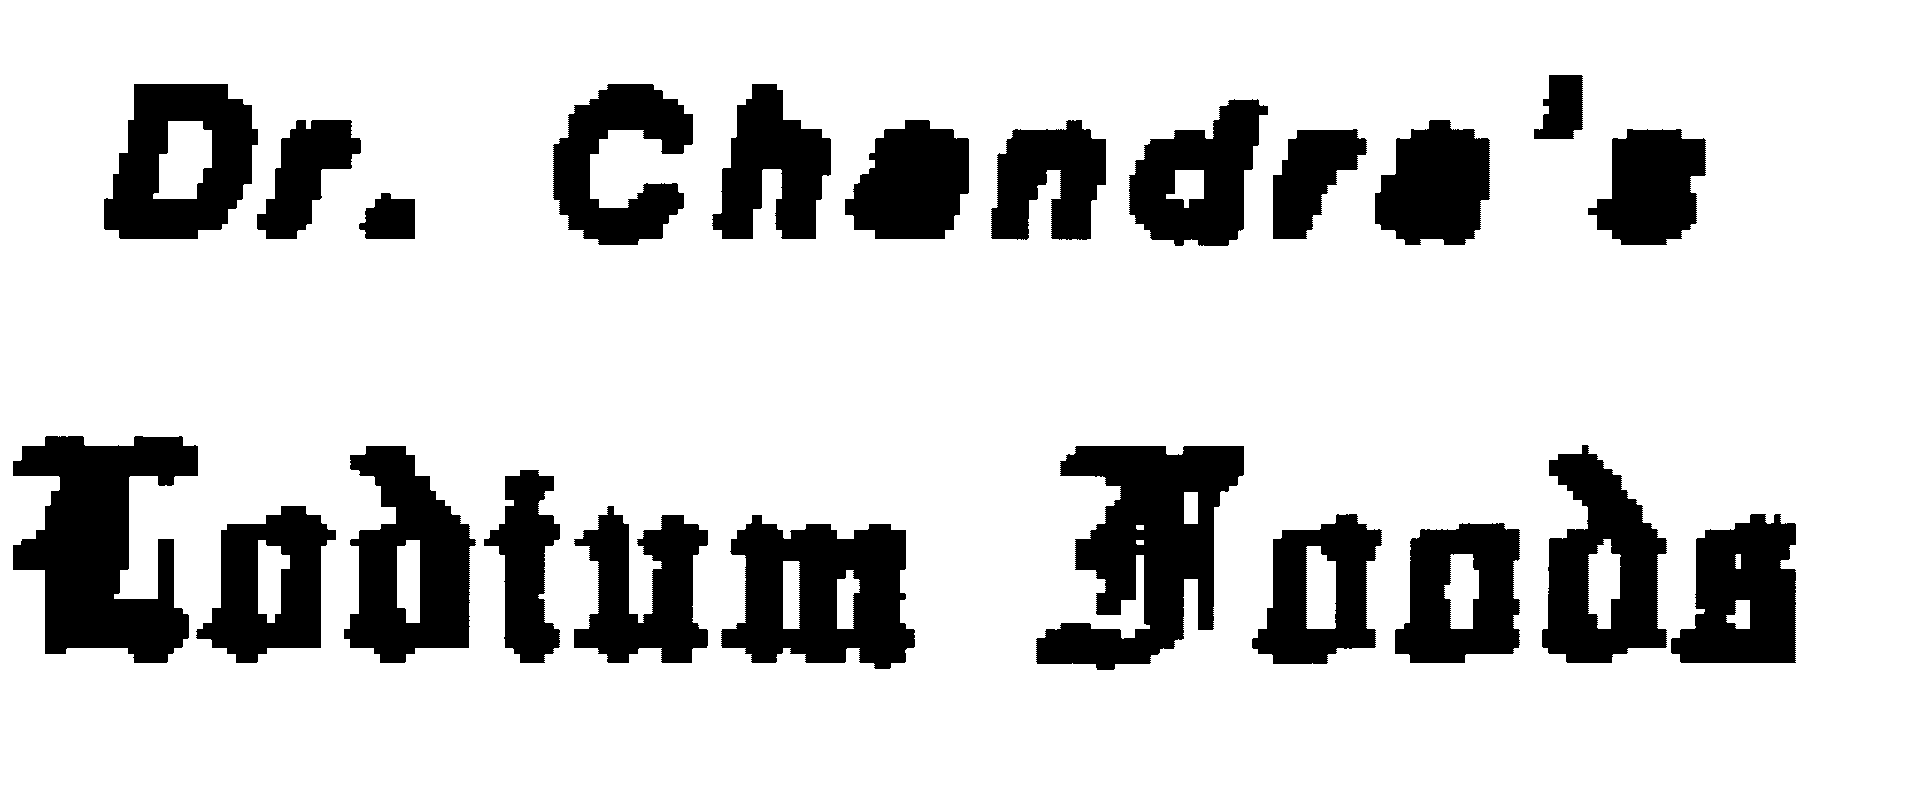  DR. CHANDRA'S LODIUM FOODS